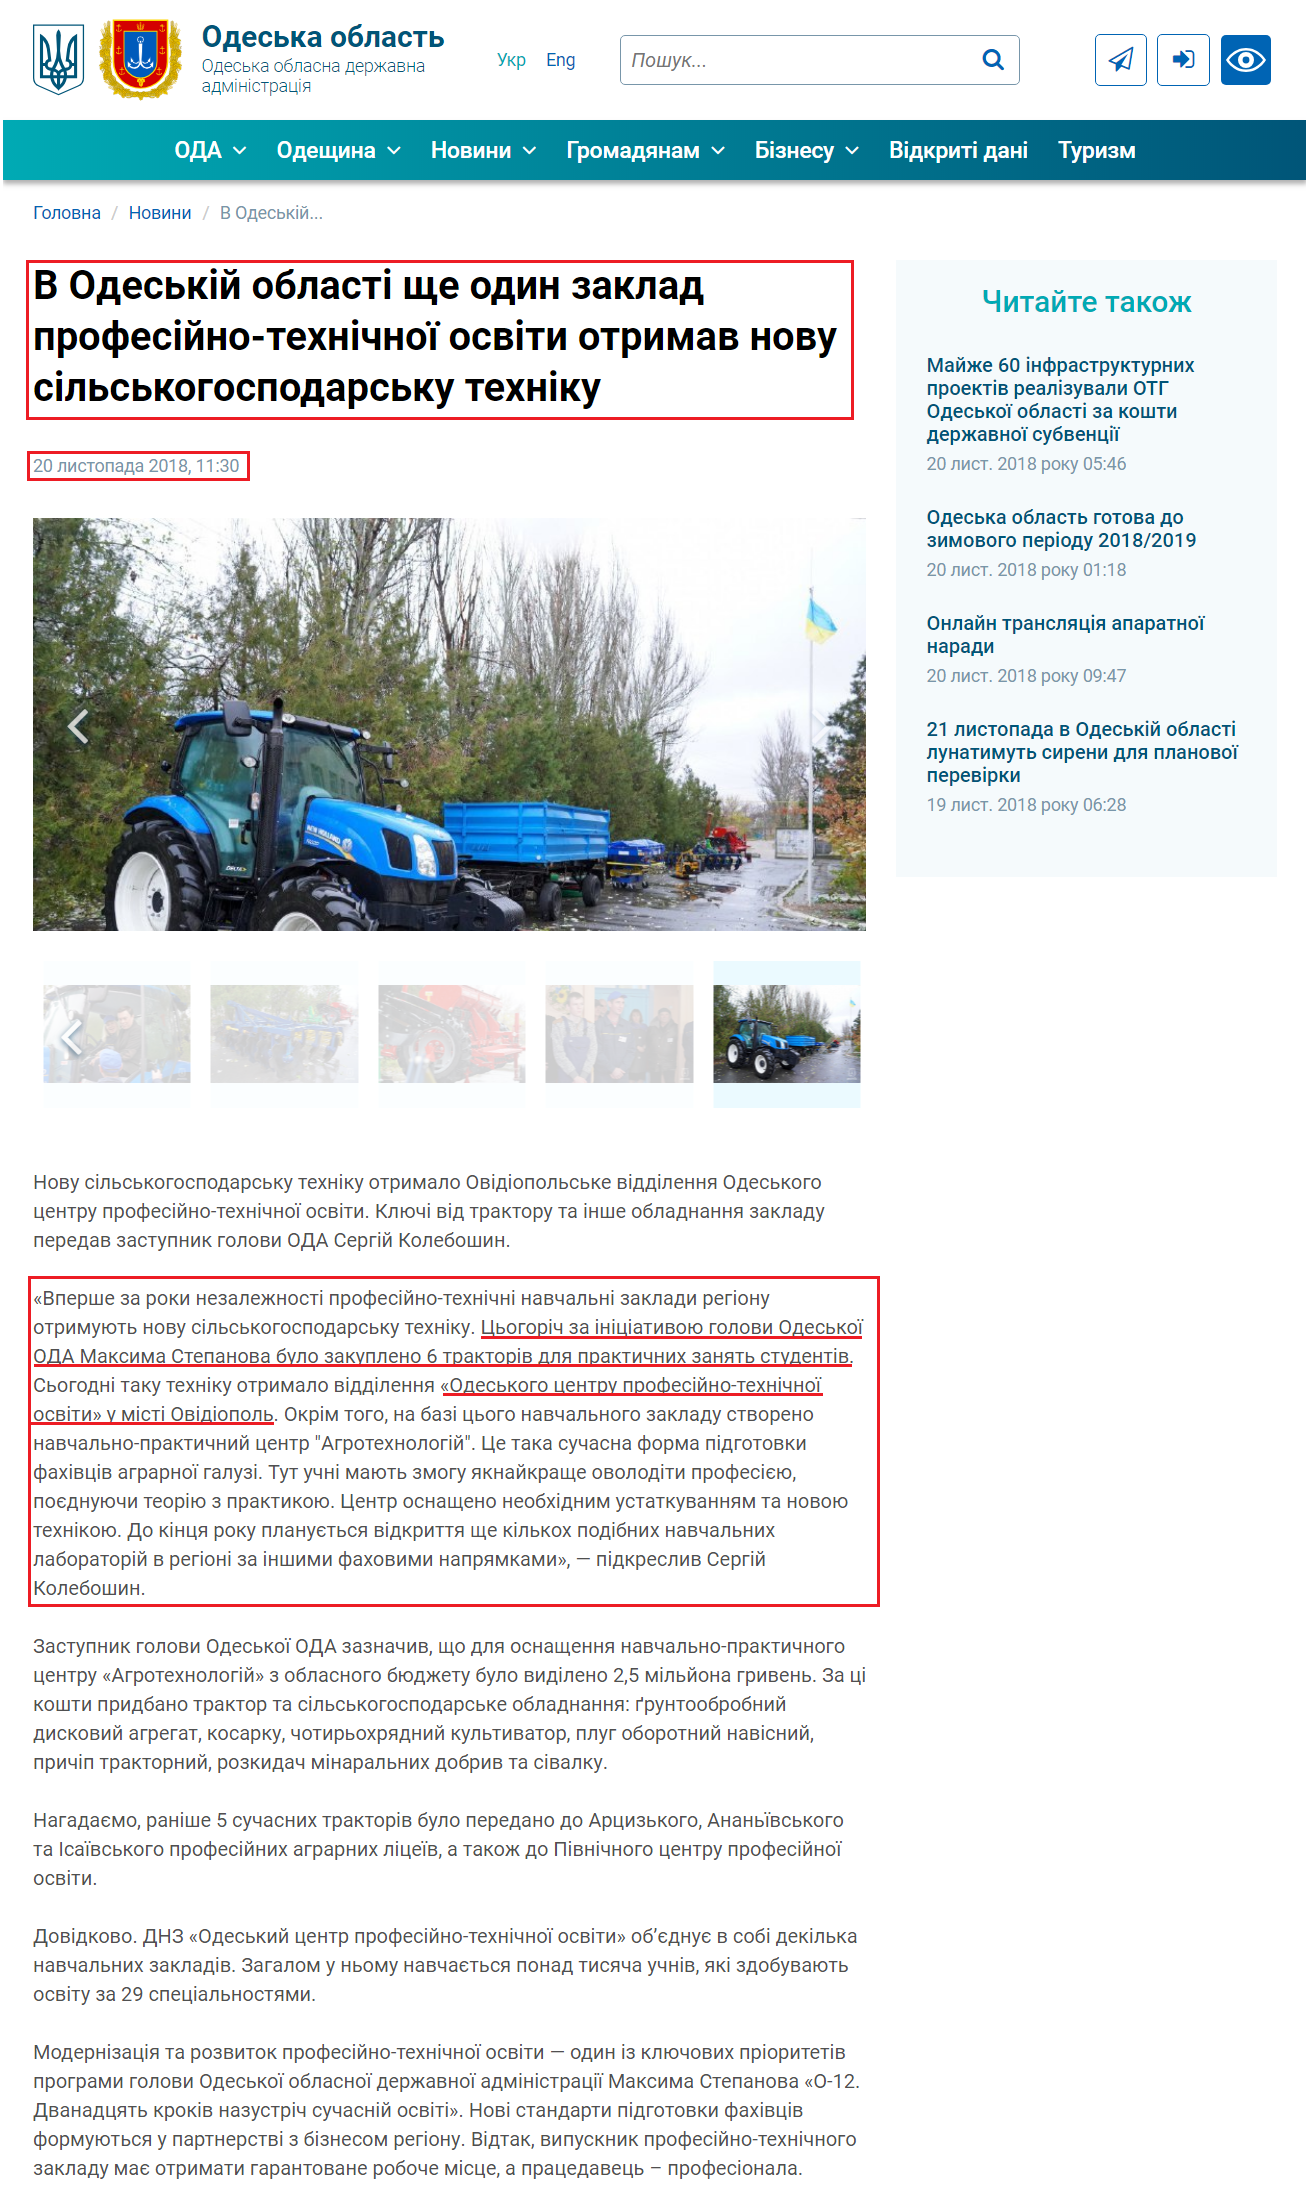 https://oda.odessa.gov.ua/news/v-odeskij-oblasti-se-odin-zaklad-profesijno-tehnicnoi-osviti-otrimav-novu-silskogospodarsku-tehniku